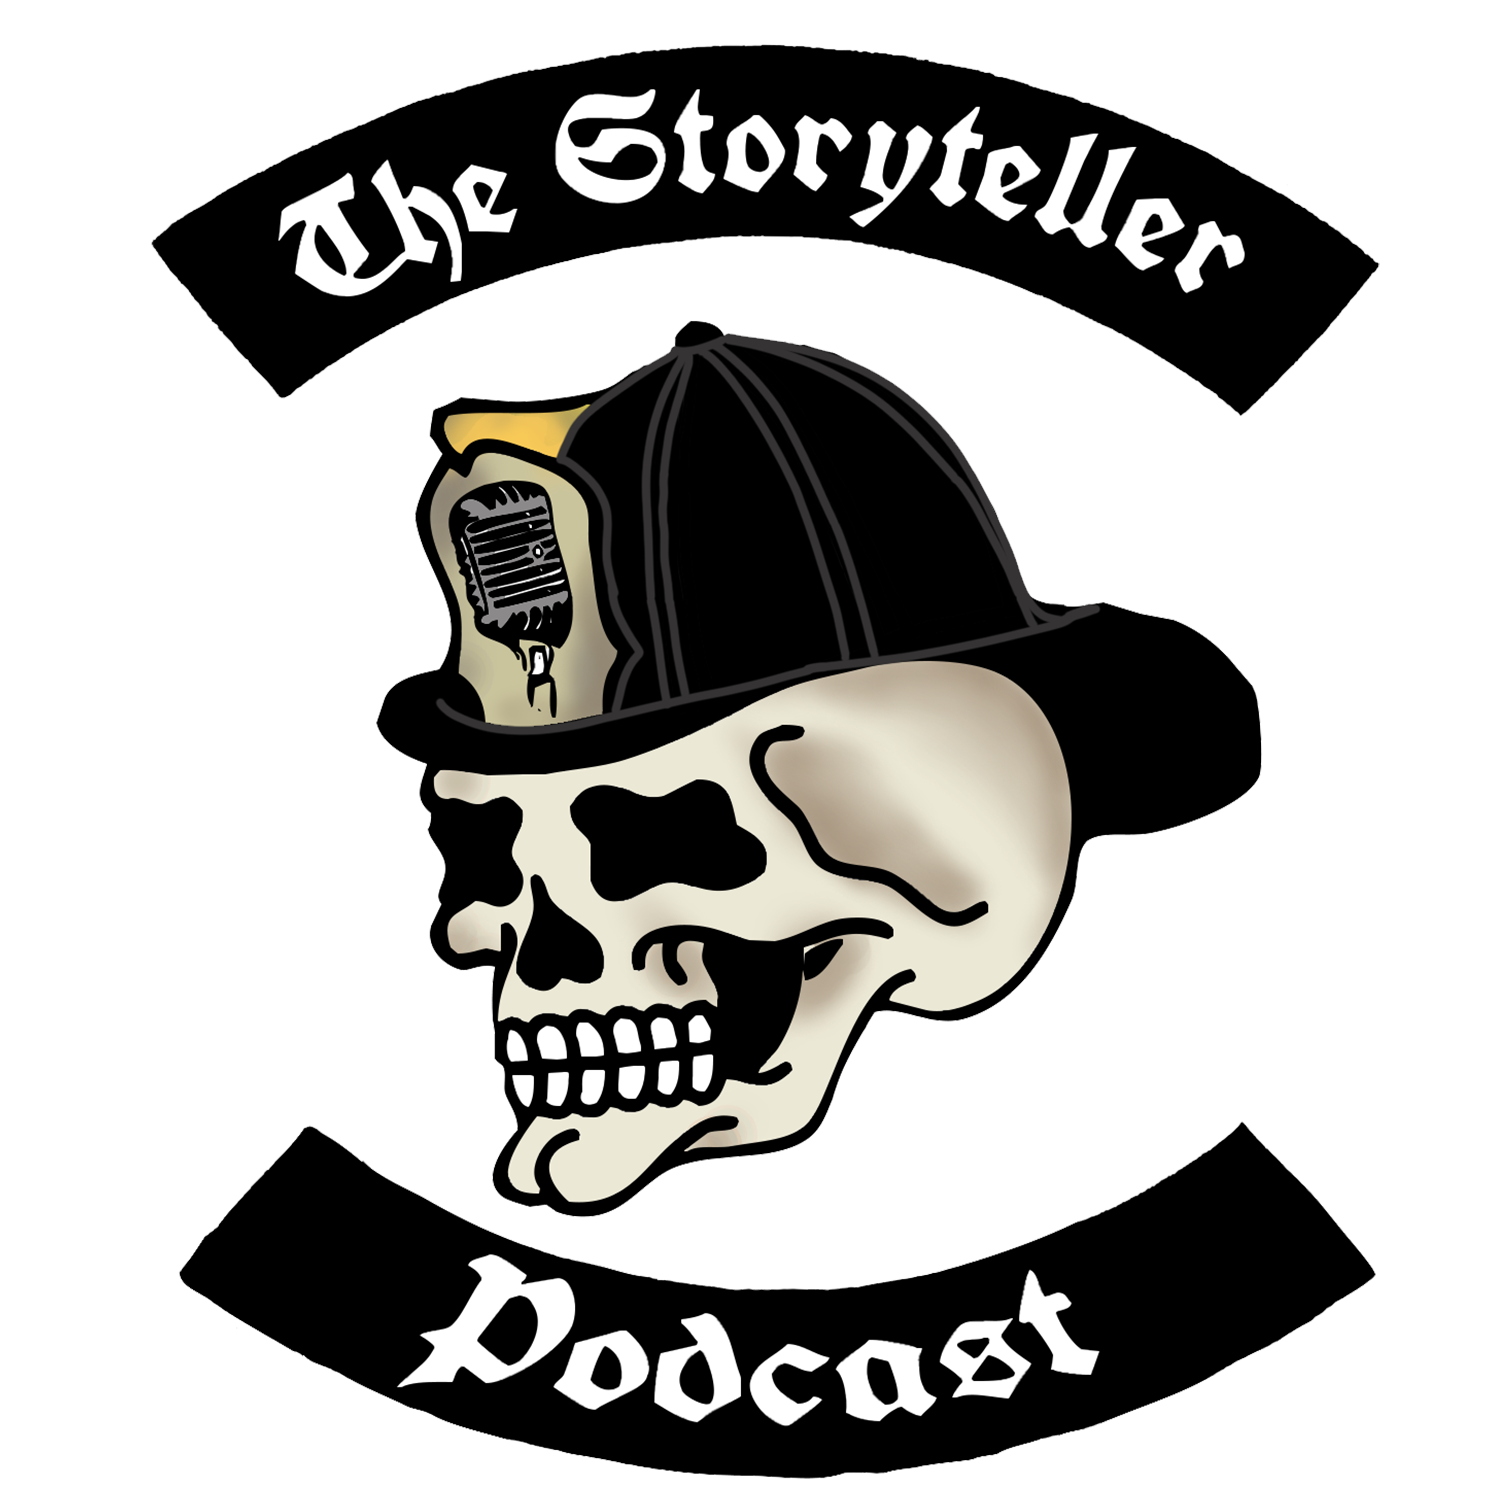 Fire Interview, The Storyteller Podcast